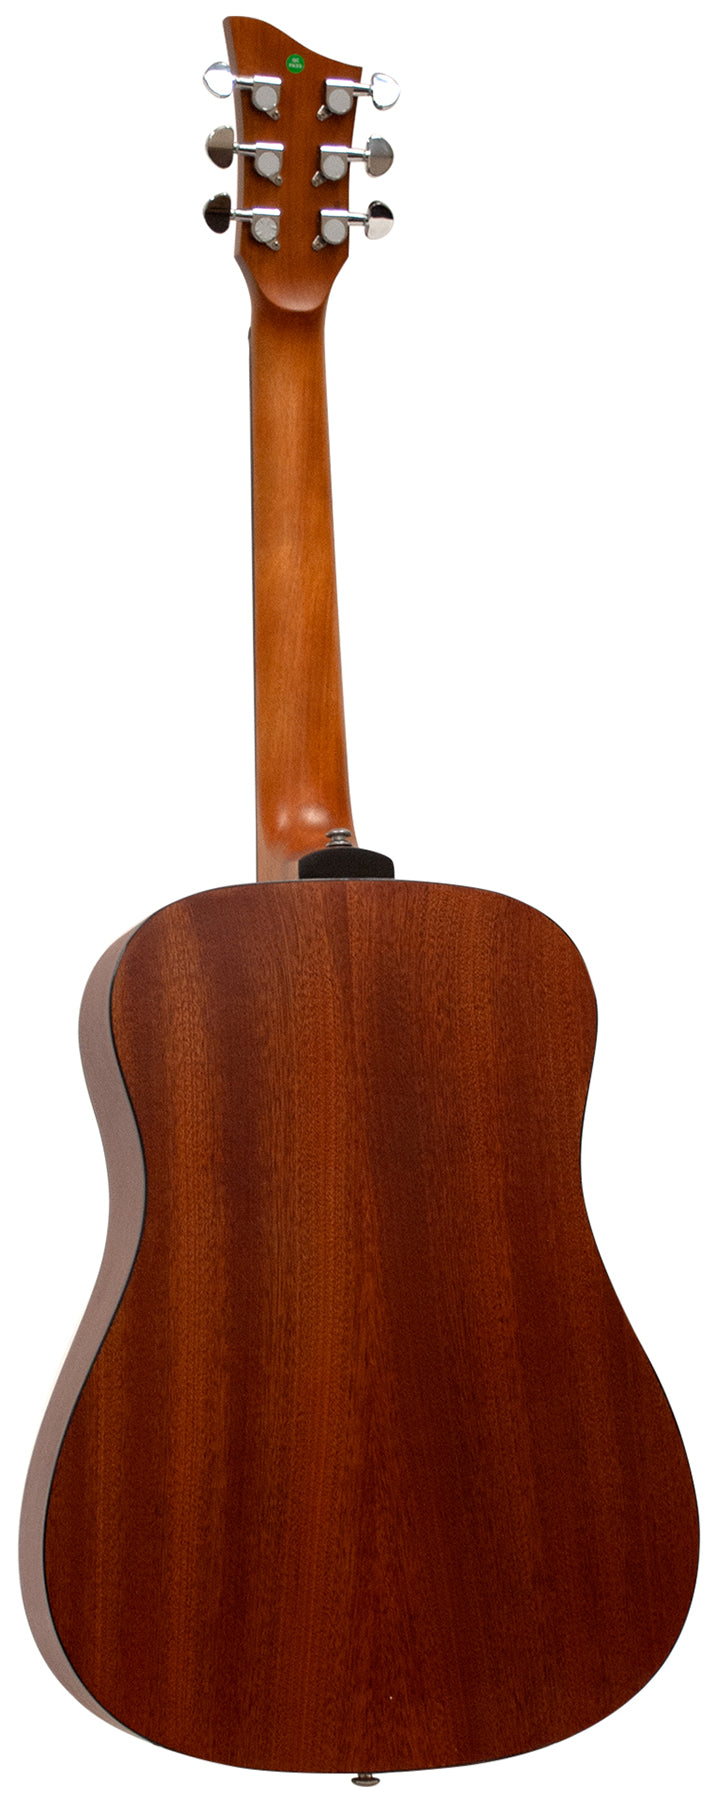 Jay Turser JTA52-N 1/2 Scale Acoustic Guitar (Natural)